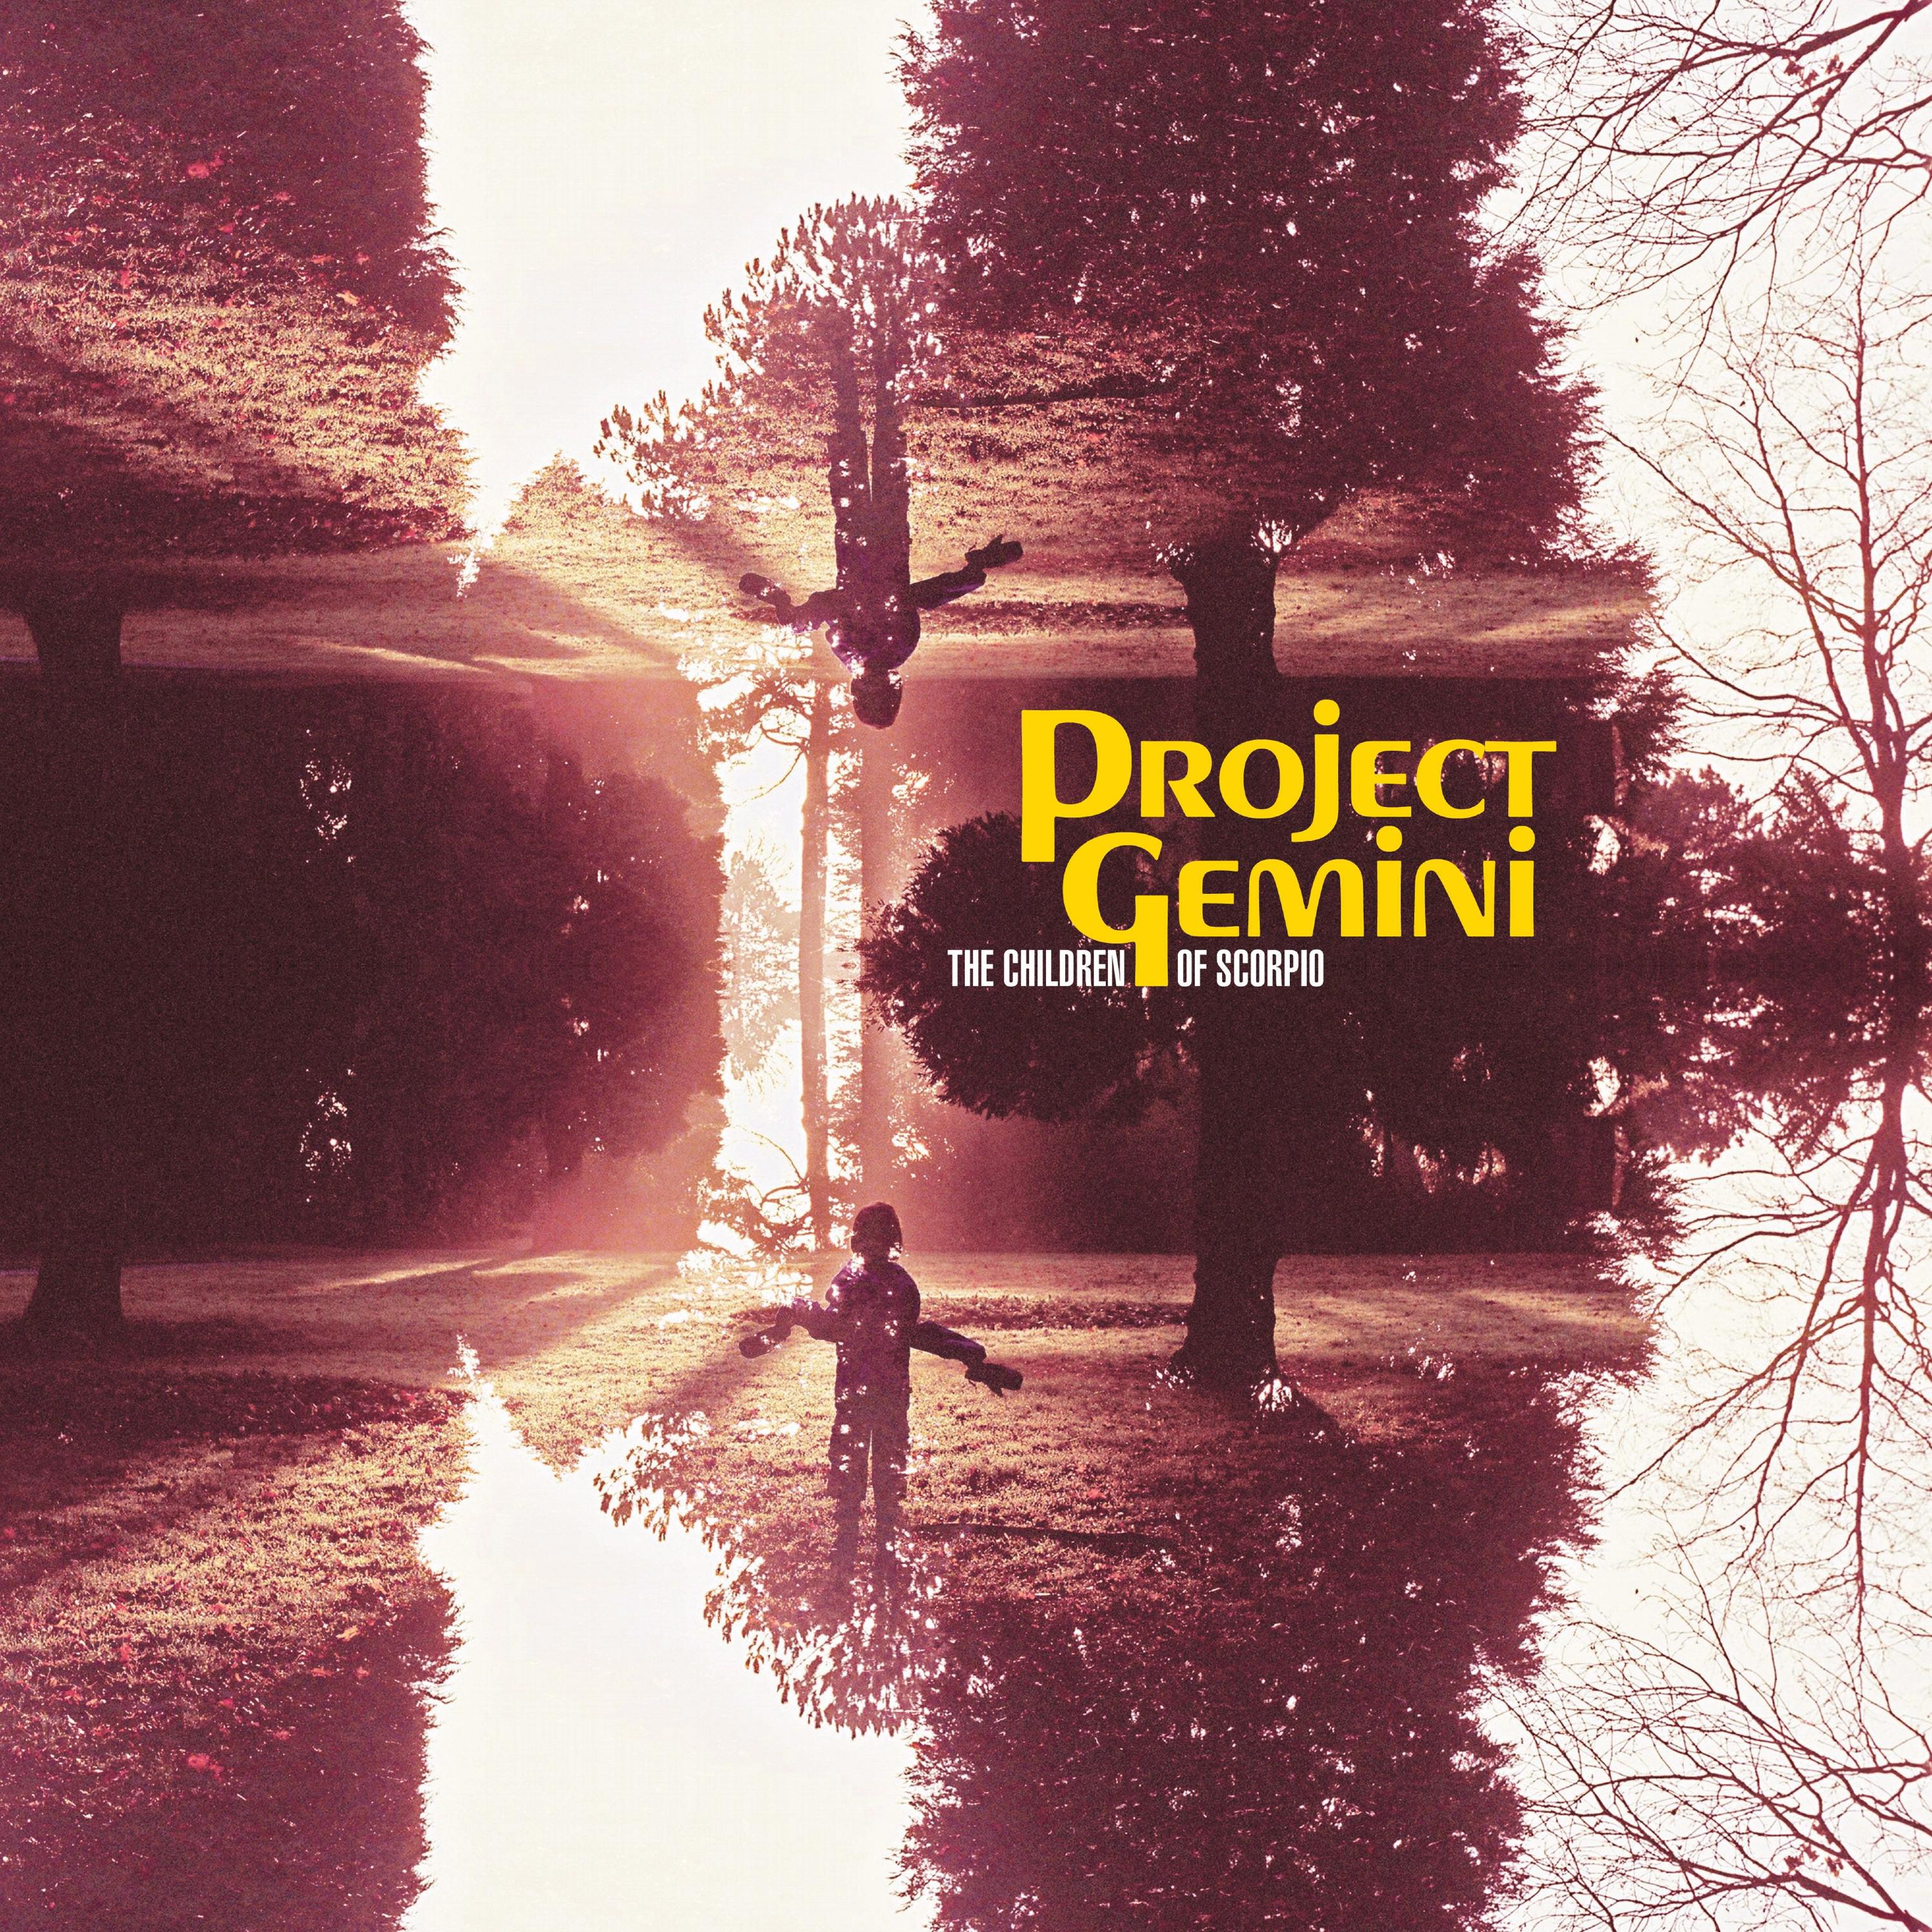 Project Gemini - Scorpio's Garden